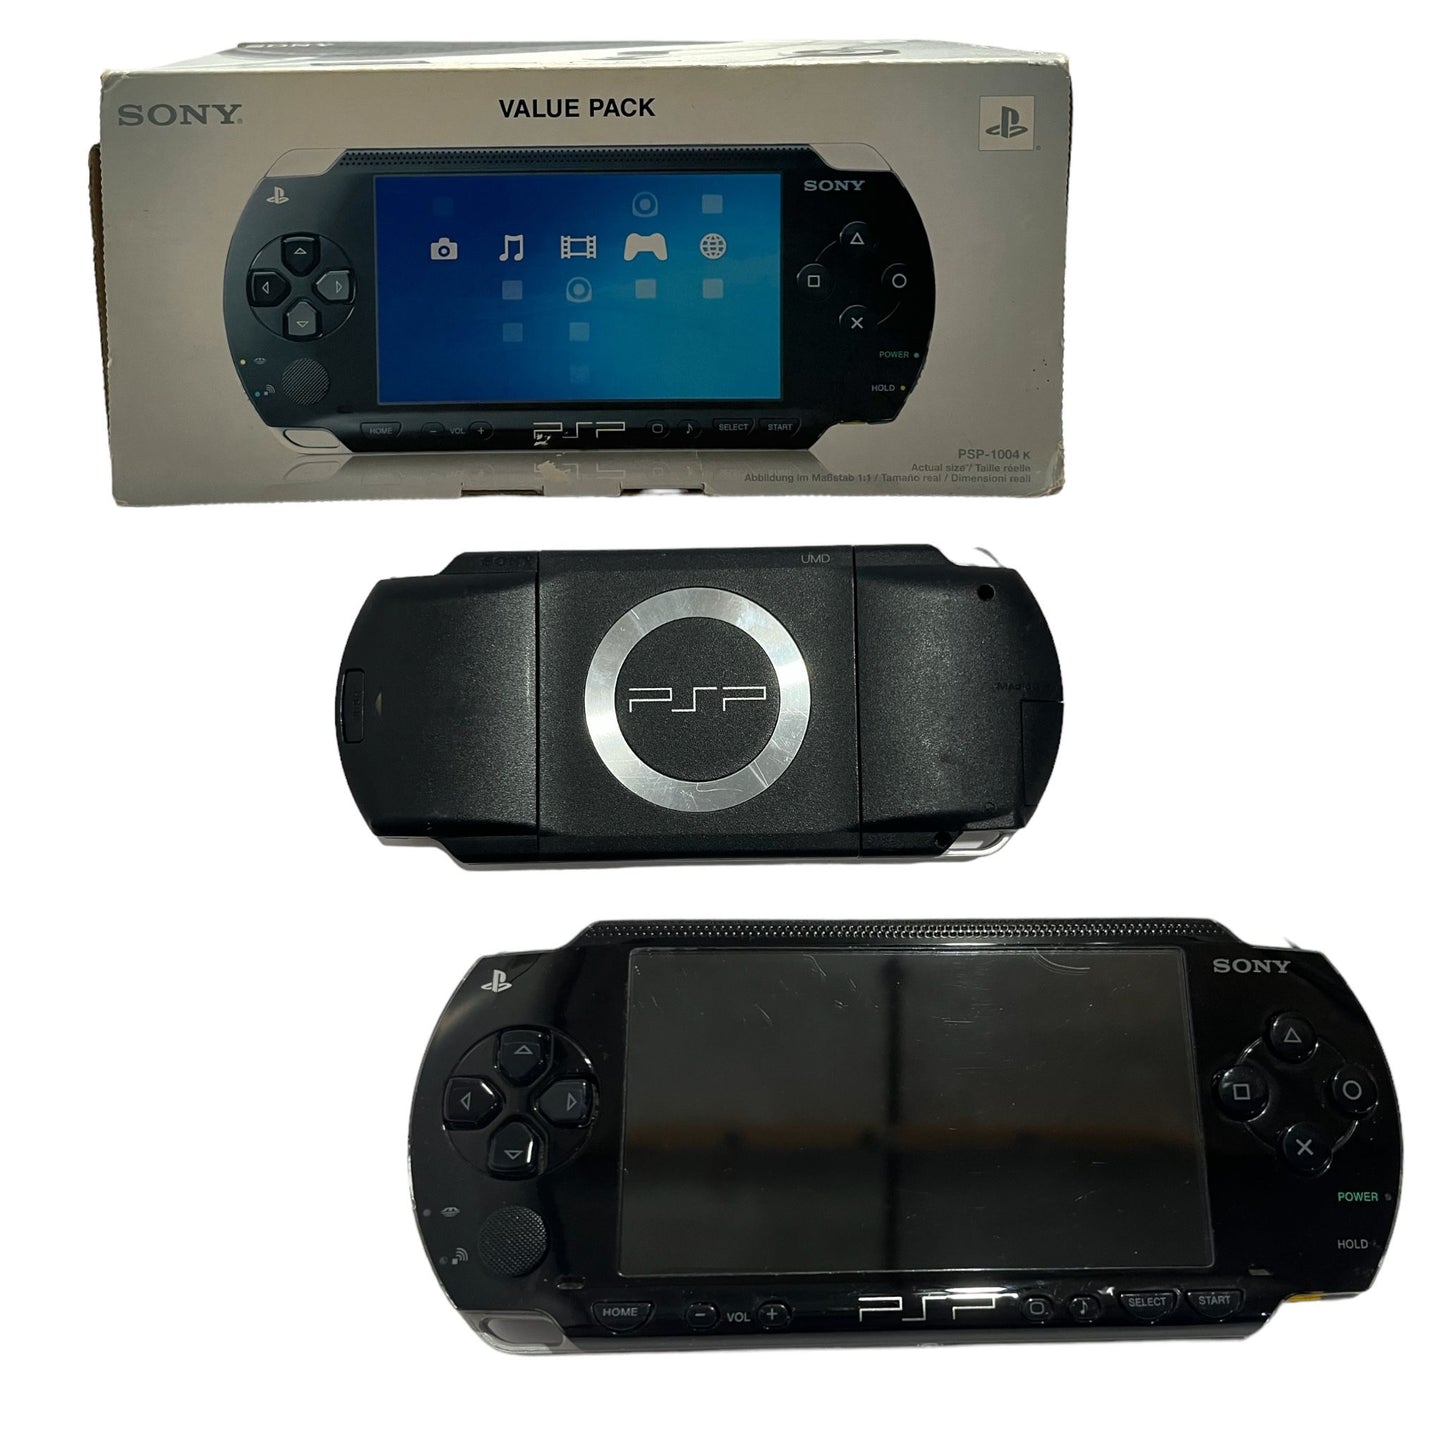 PlayStation Portable PSP-1004 Black